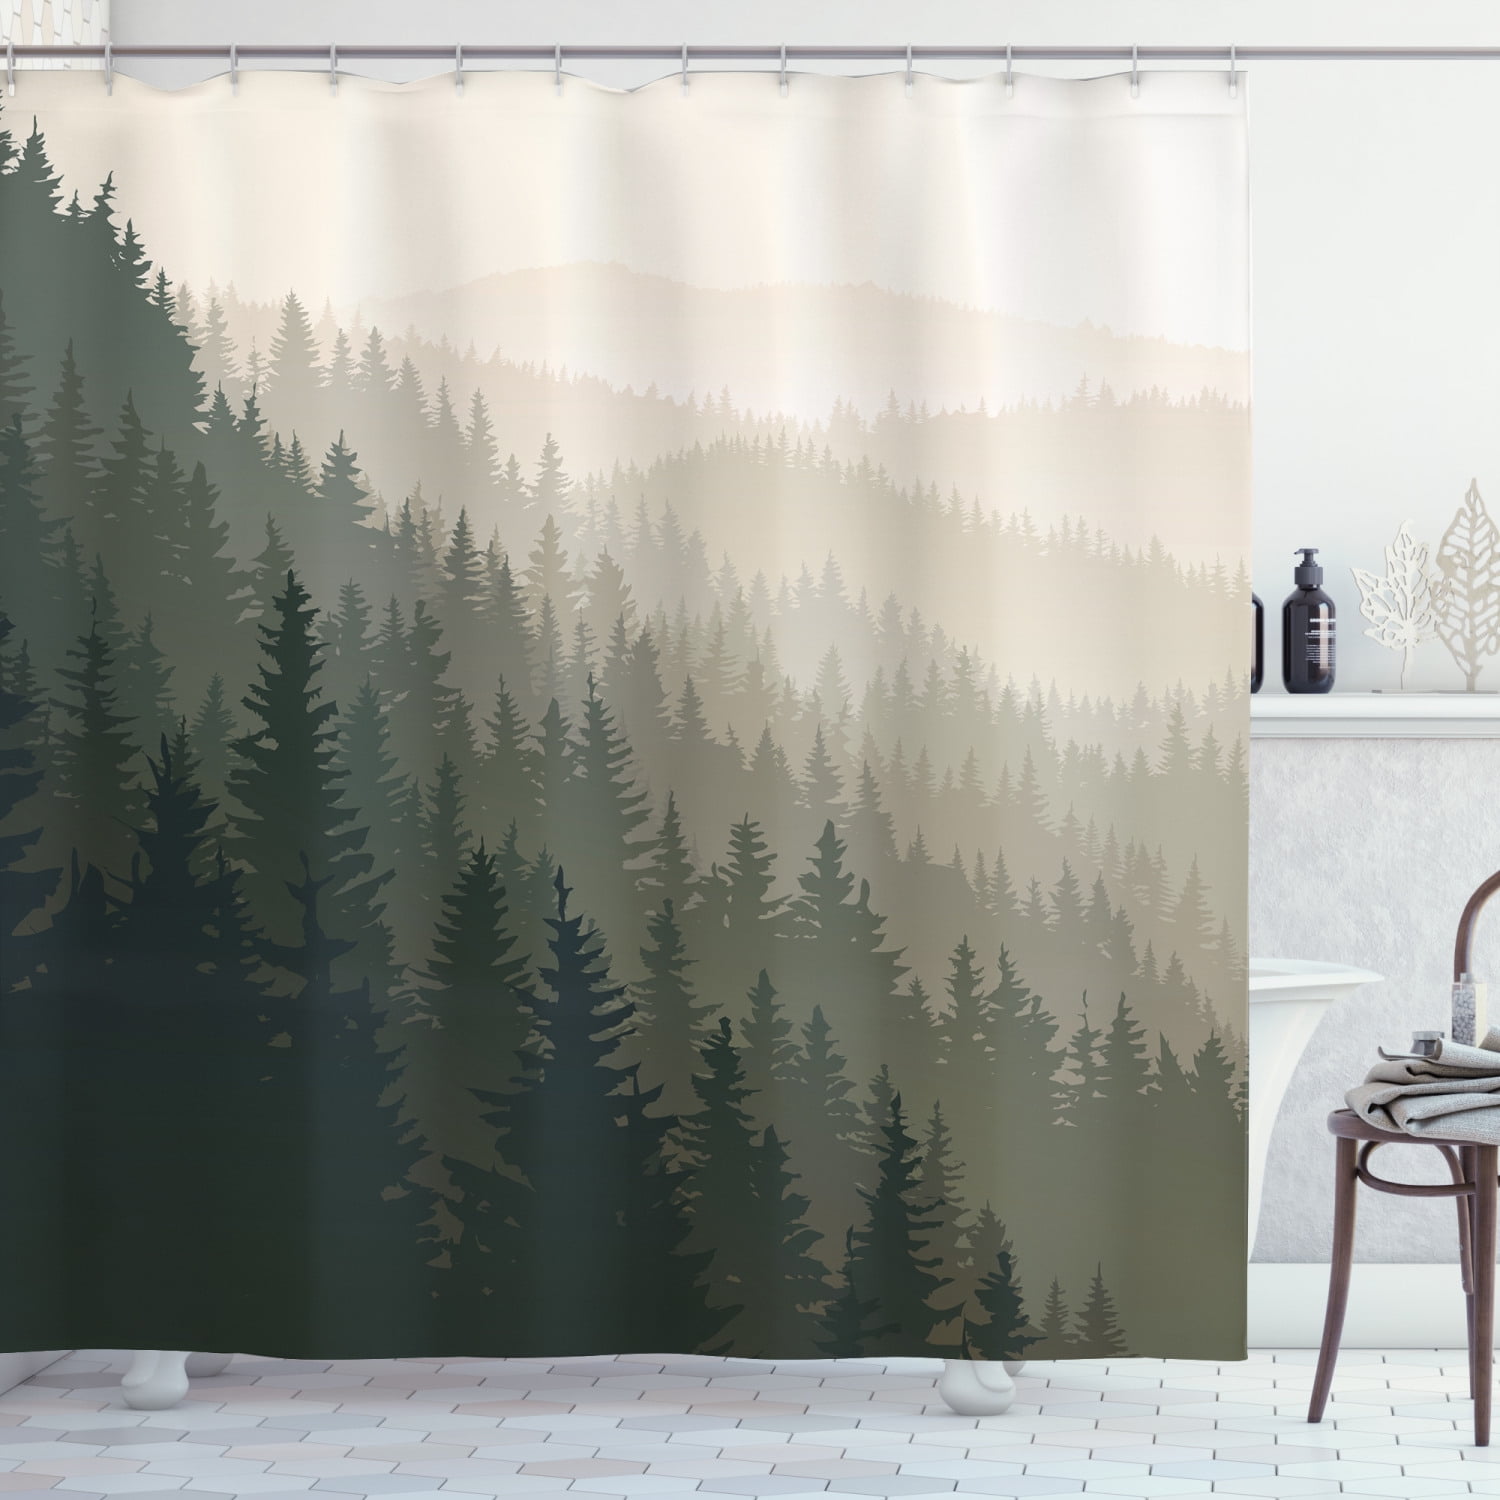 Summer Green Forest Shower Curtain Liner Bathroom Set Mat Polyester Fabric Hooks 